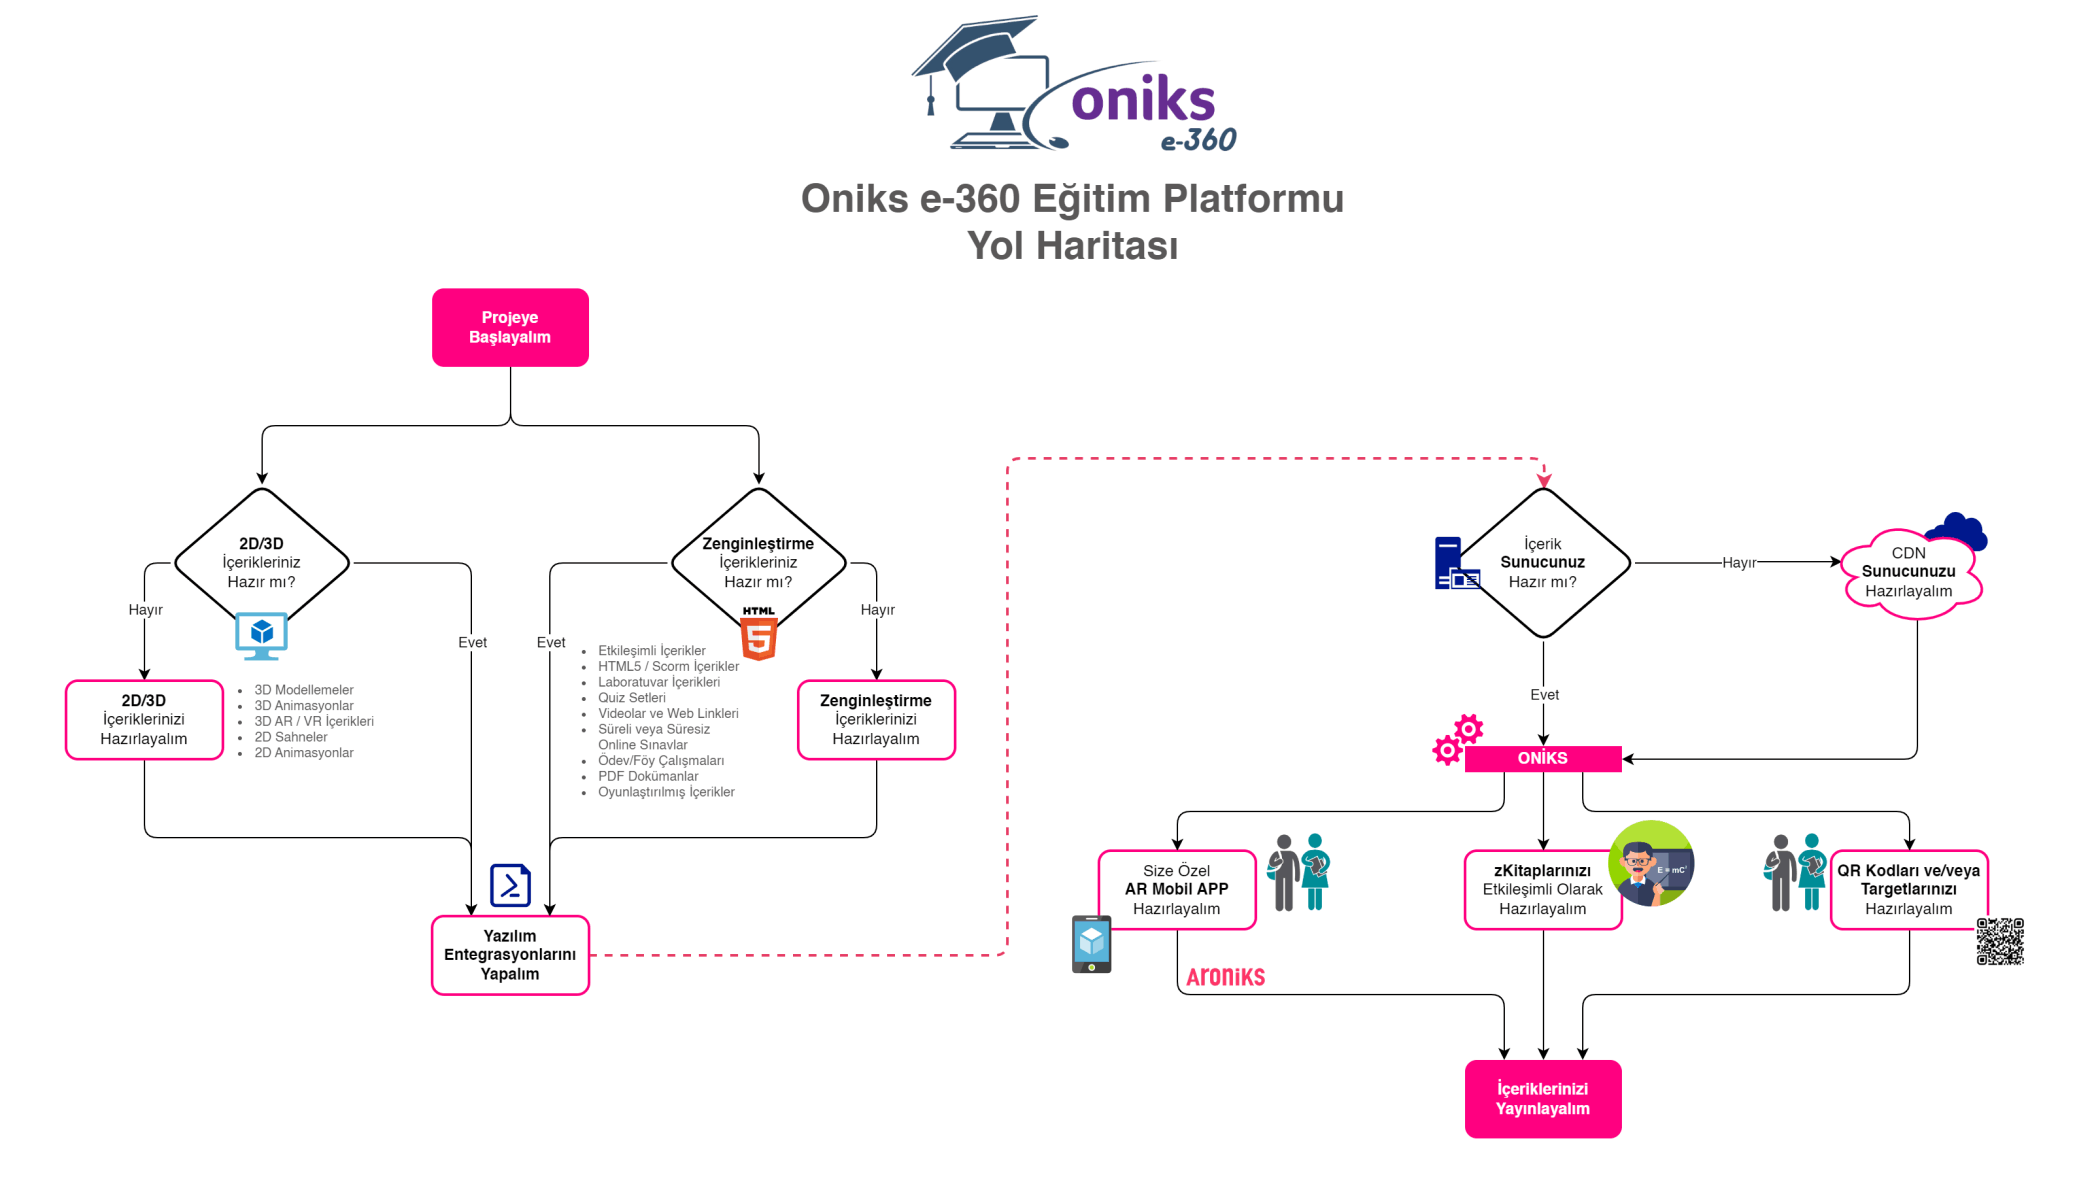 Oniks e-360 Eğitim Platformu